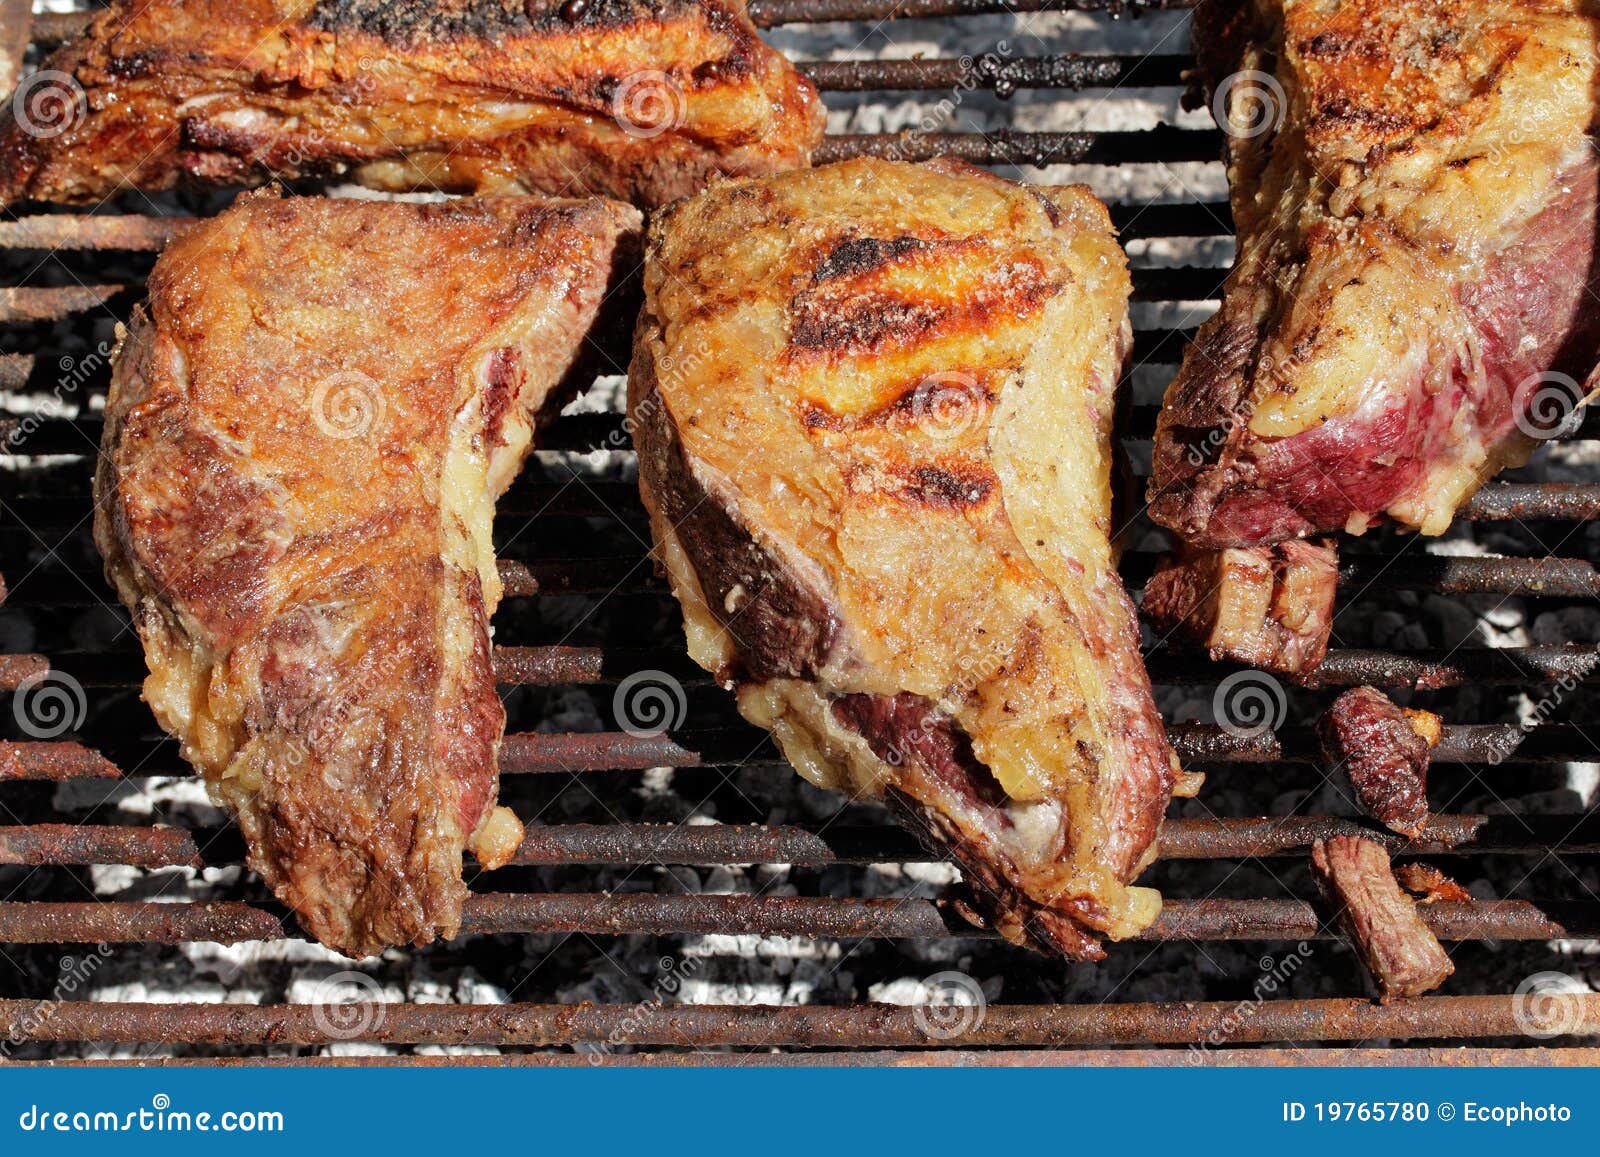 argentine barbecue